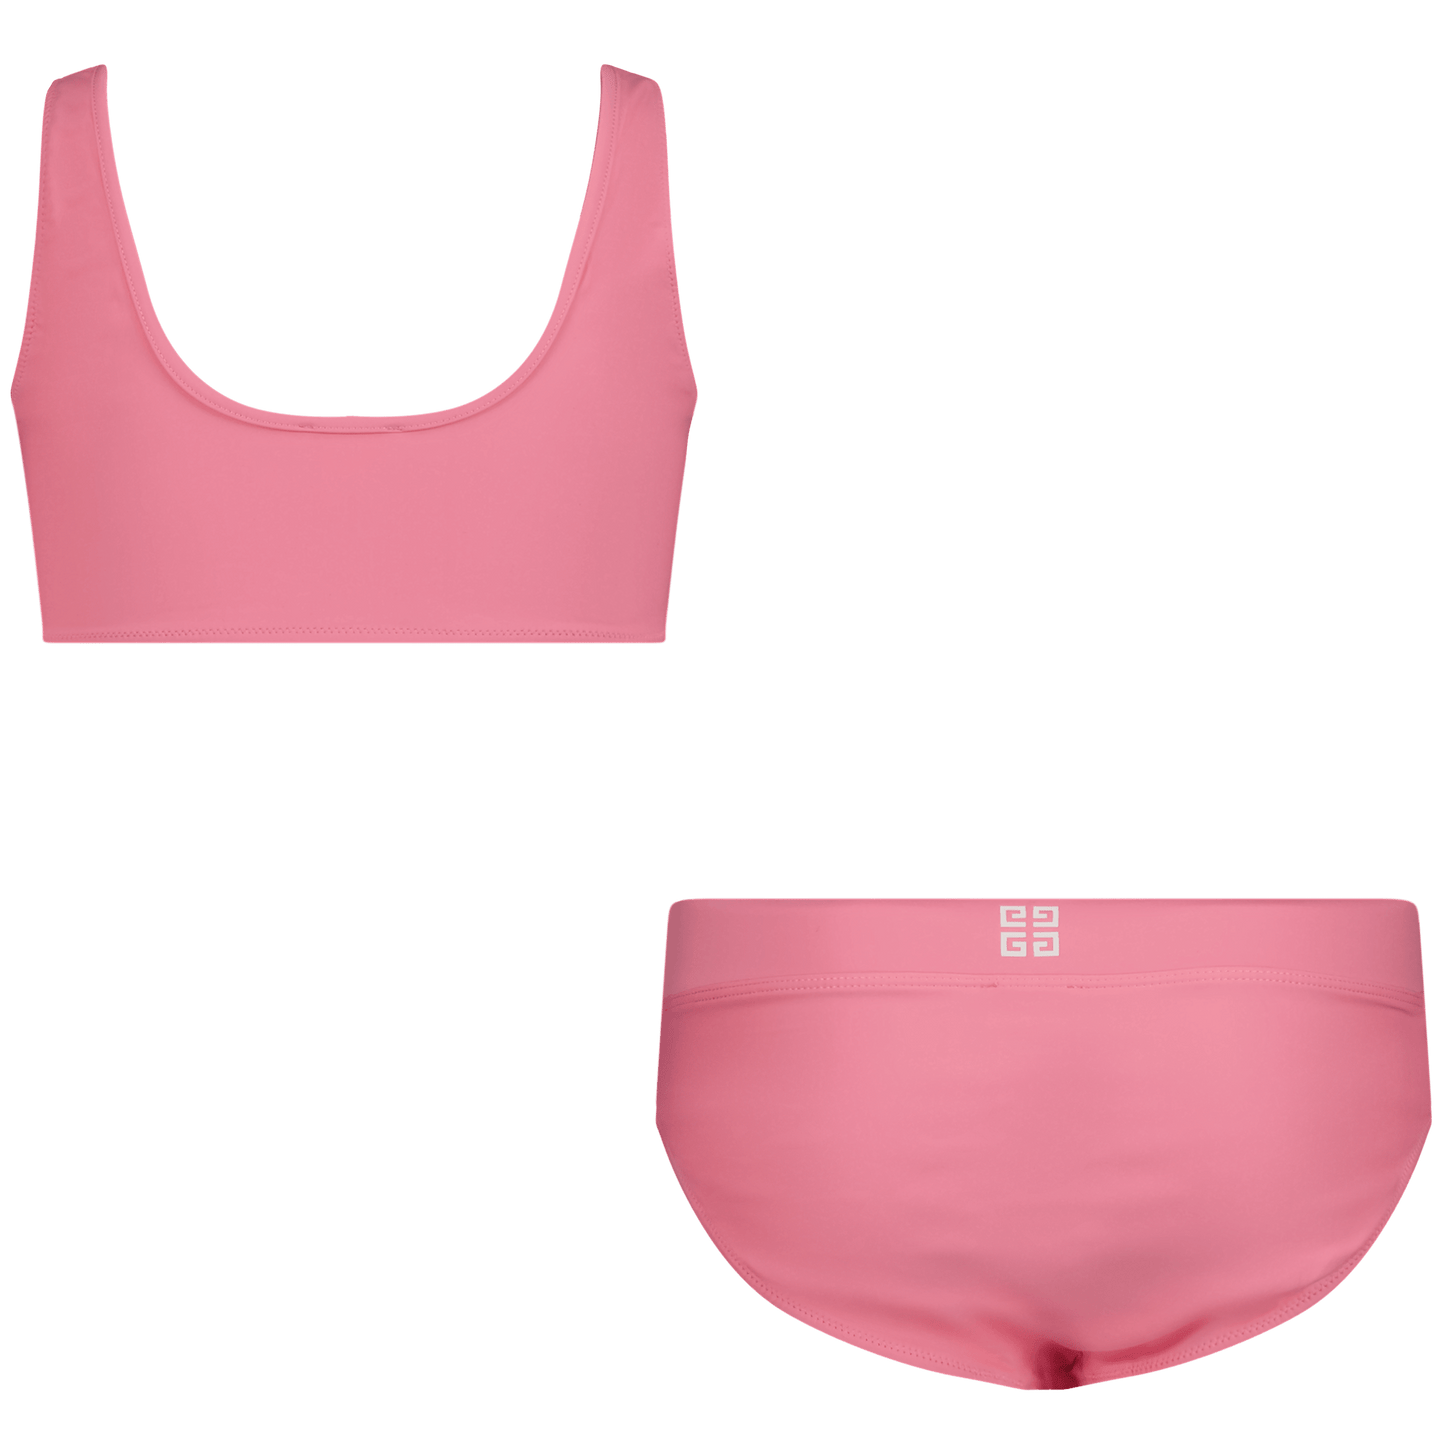 Givenchy Kinder Meisjes Zwemkleding Roze 4Y